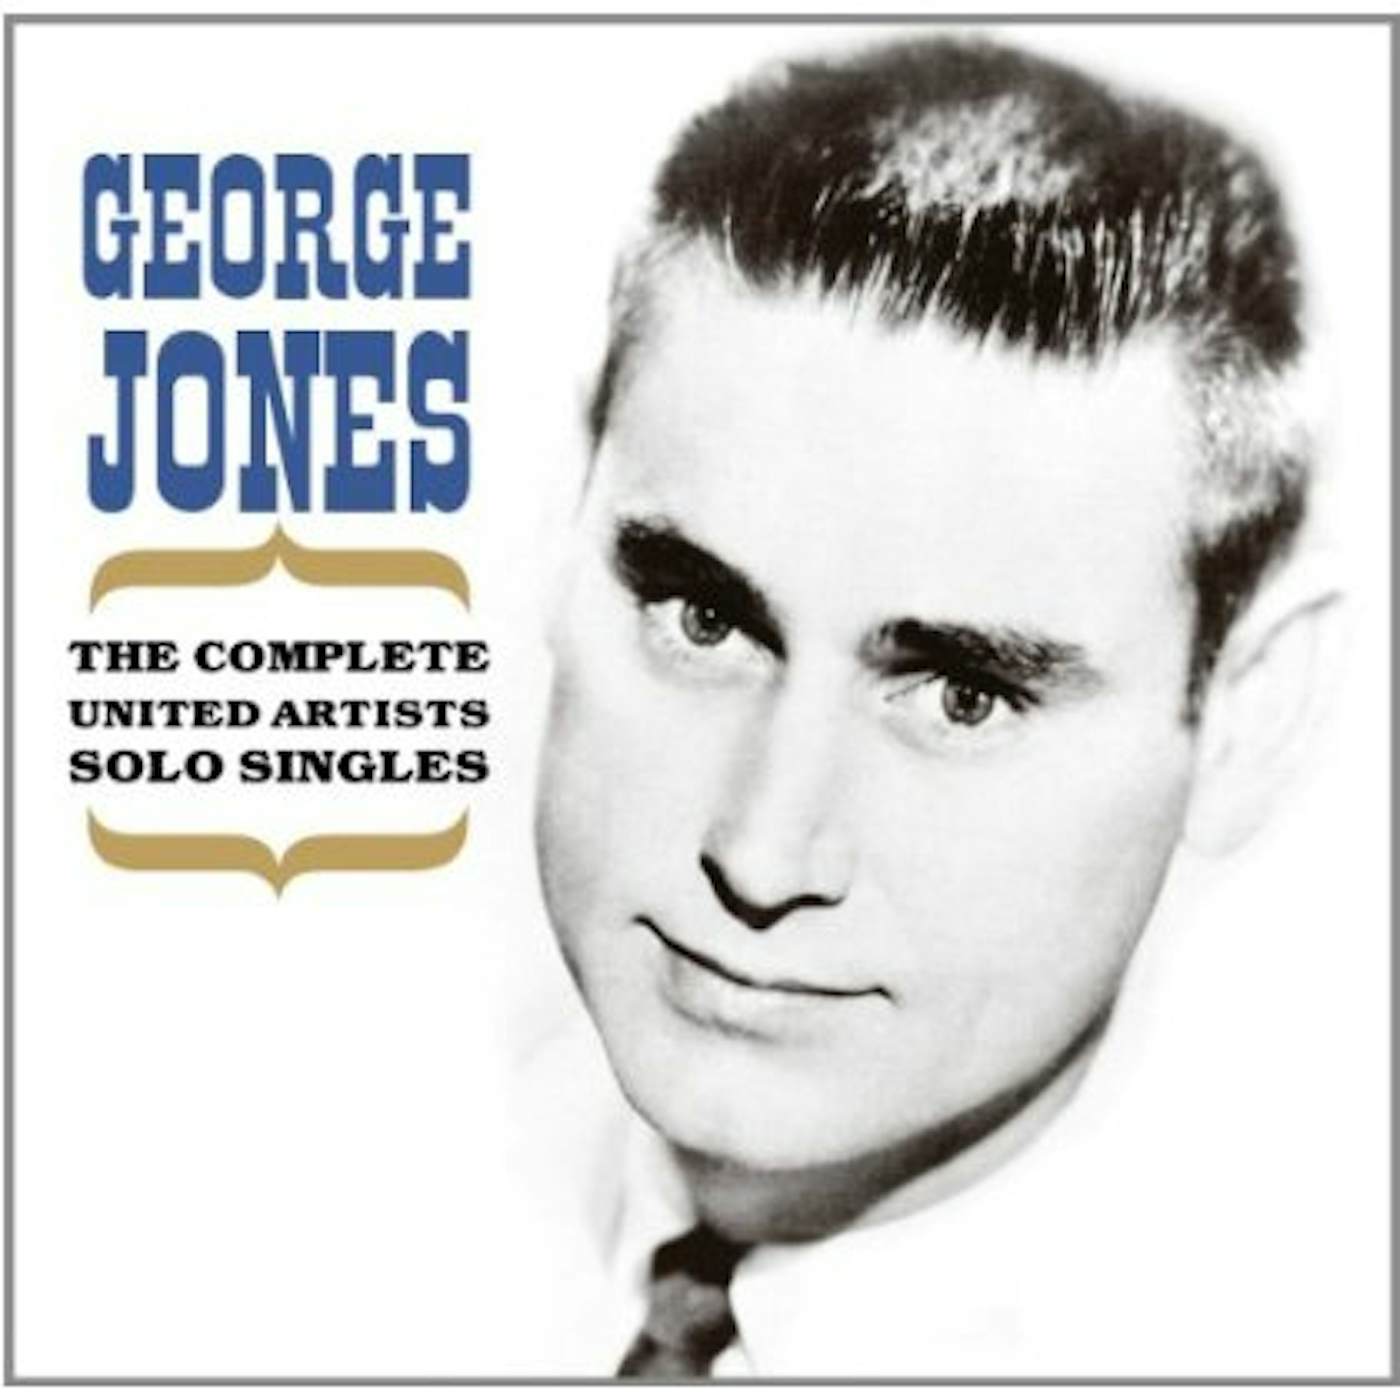 George Jones COMPLETE UNITED ARTISTS SOLO SINGLES CD